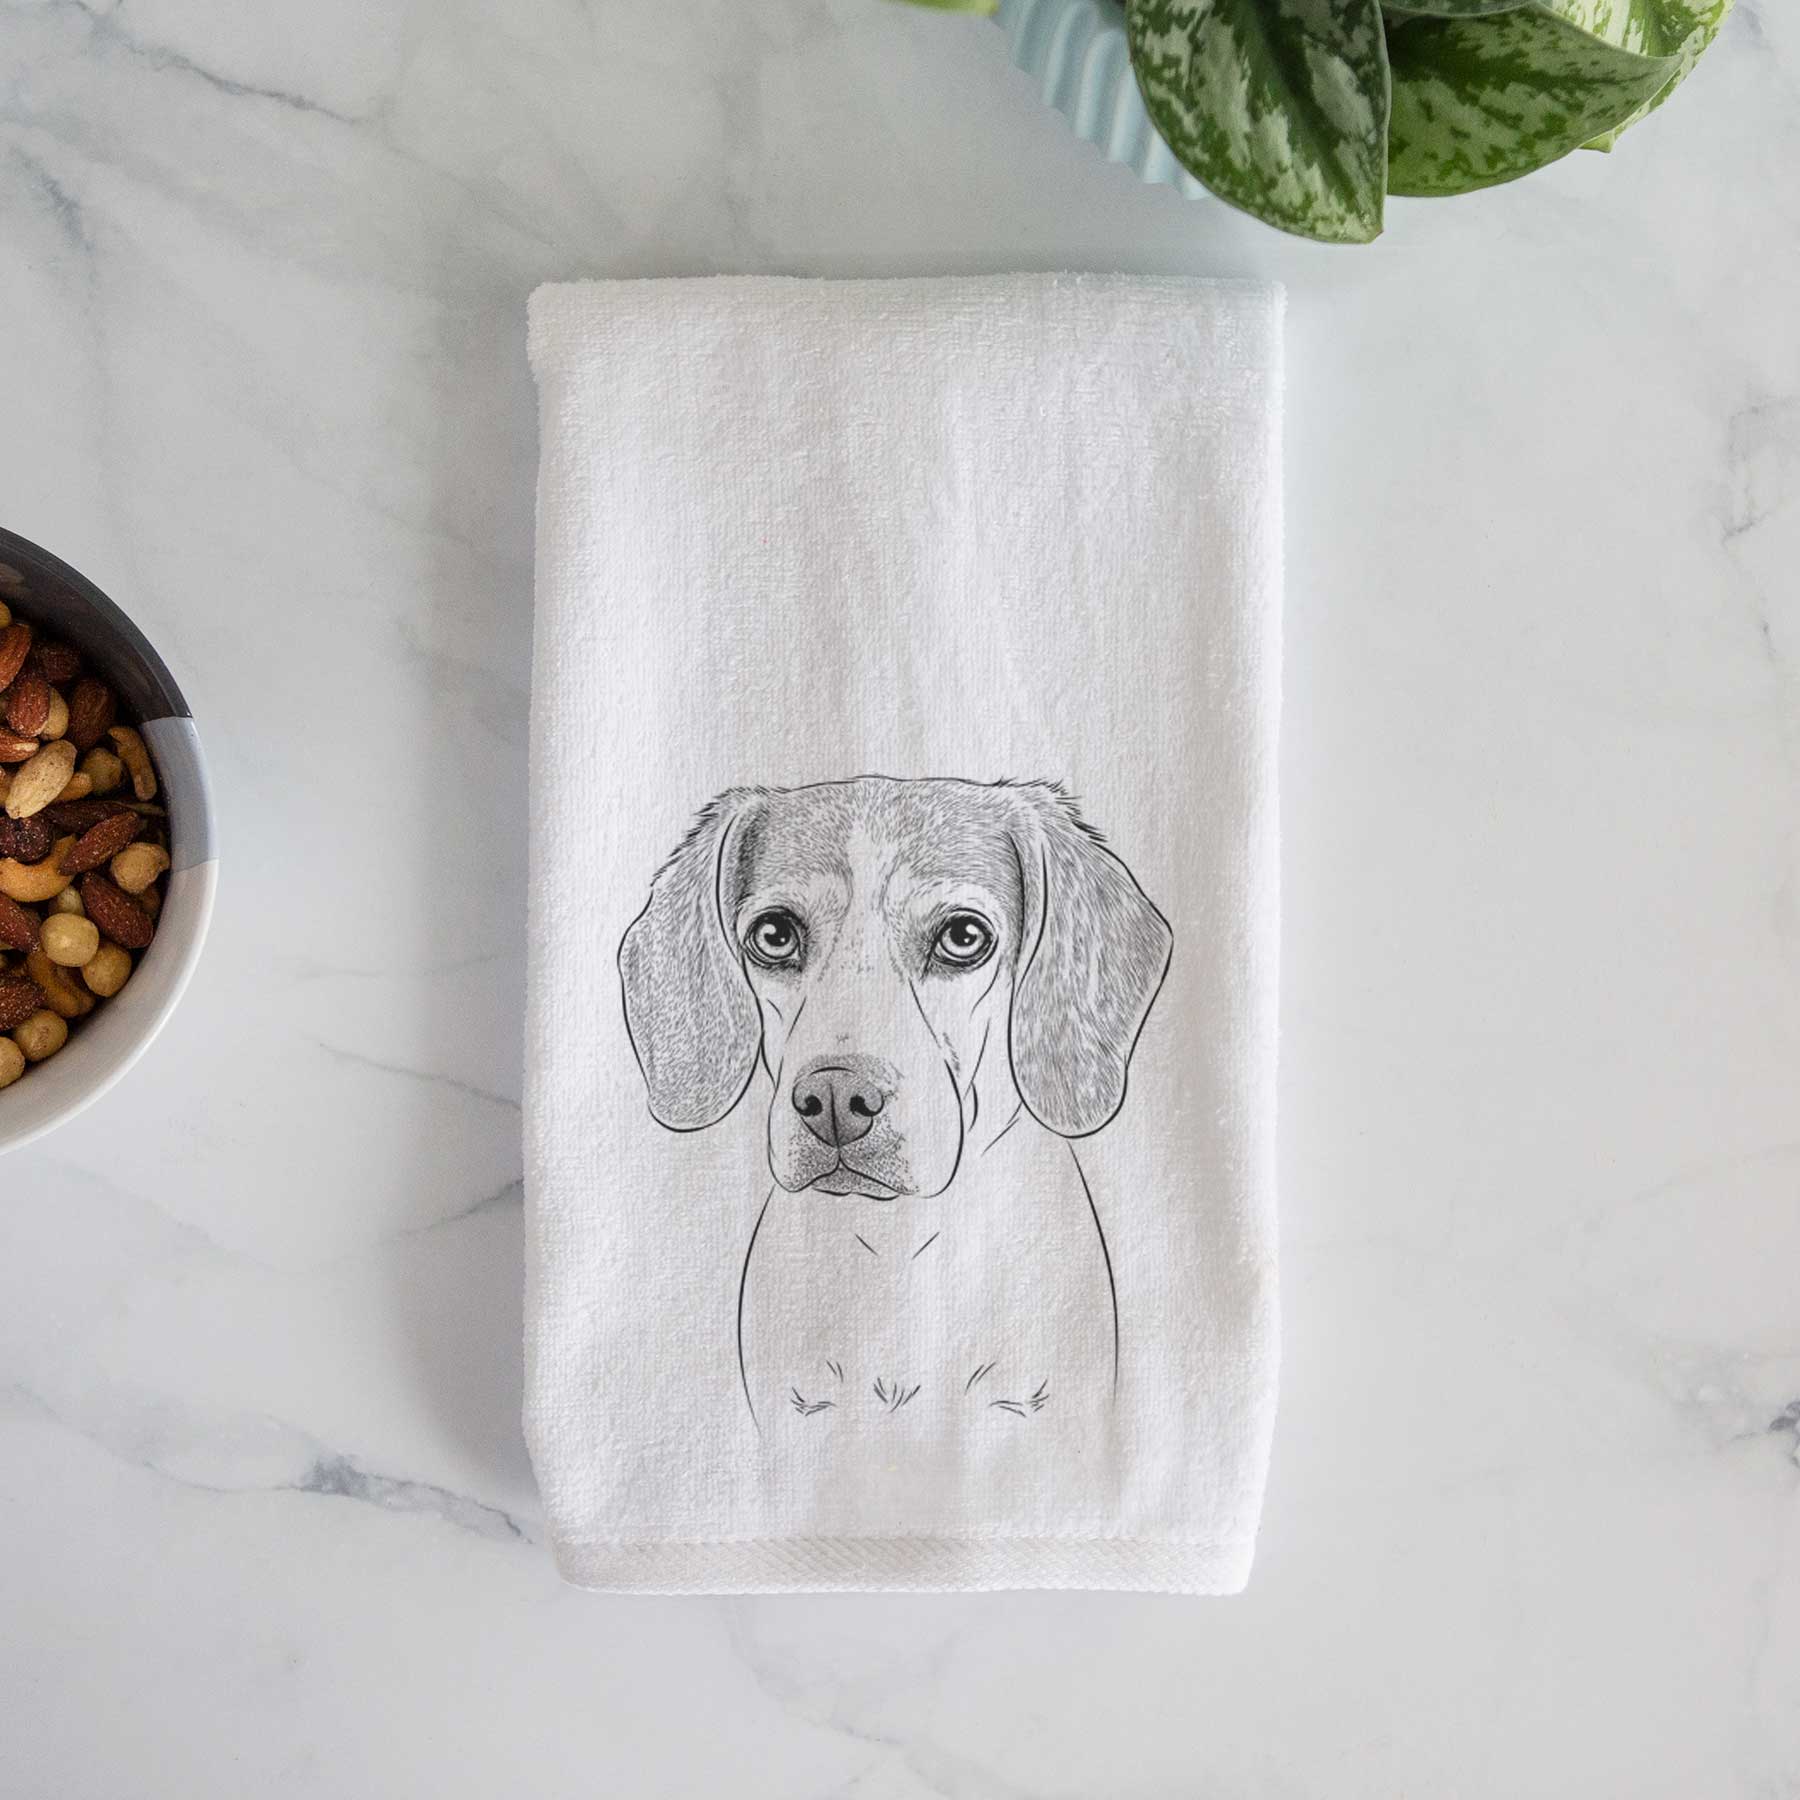 Bumbee the Beagle Hand Towel